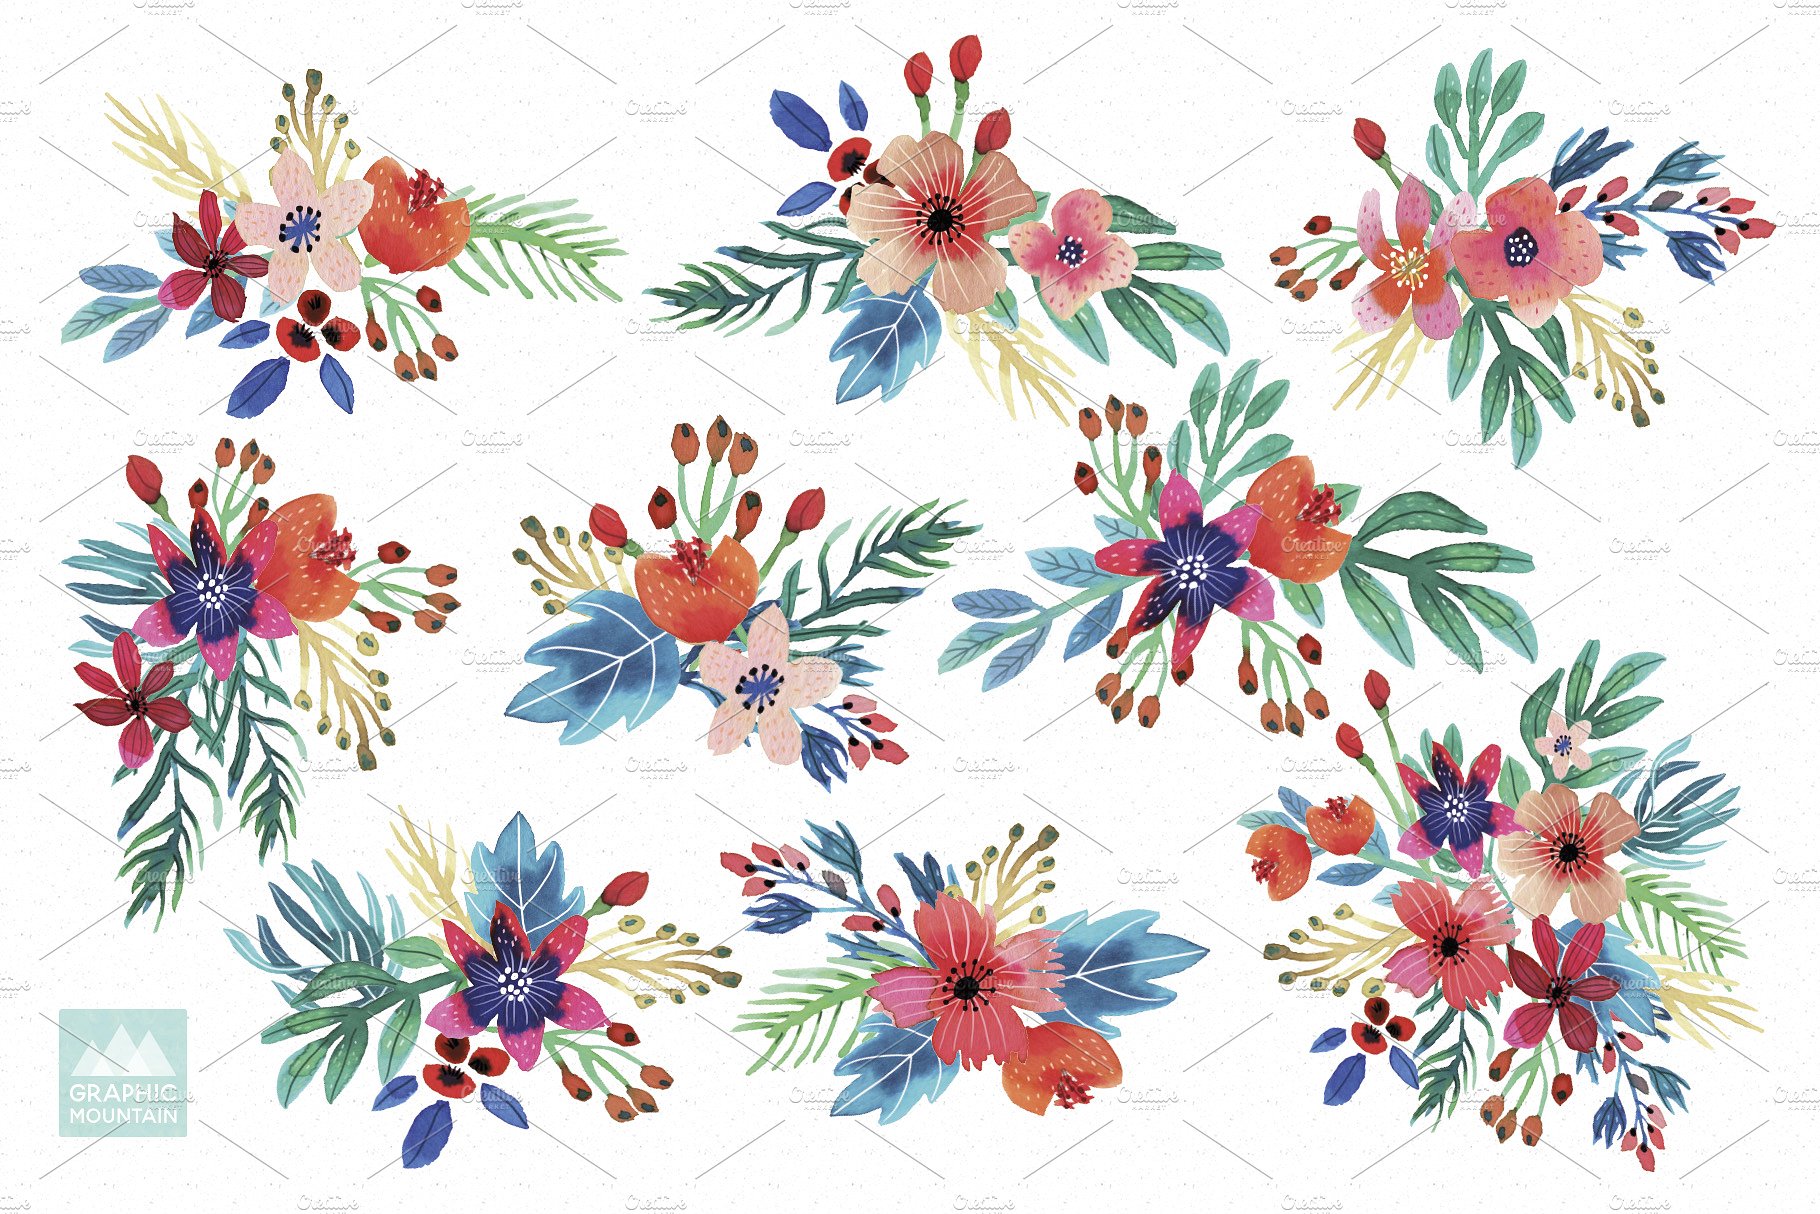 娇艳花卉水彩插画合集 Petite Flowers Watercolor Collection插图(3)